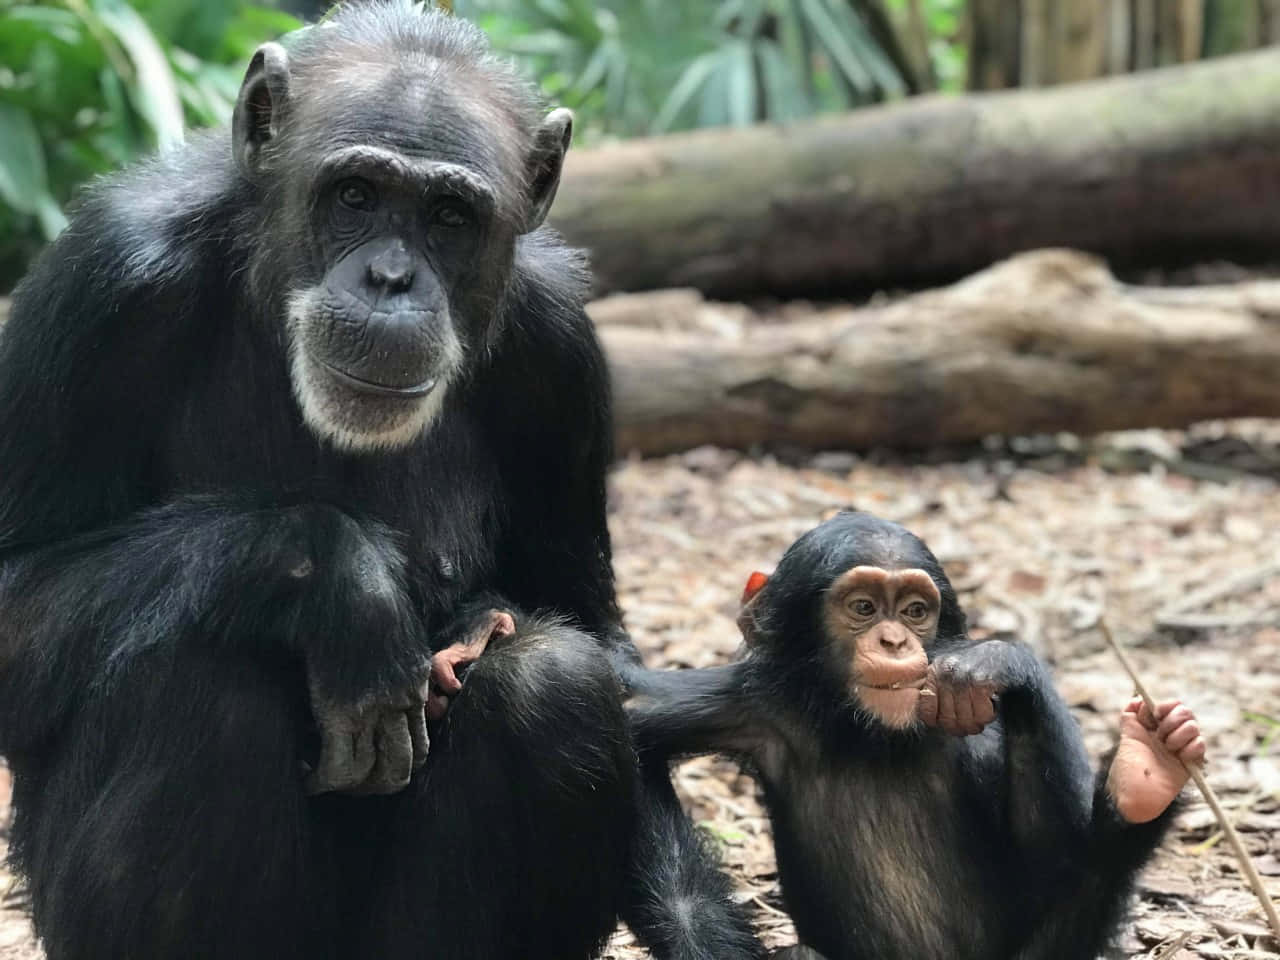 A curious chimpanzee looks on